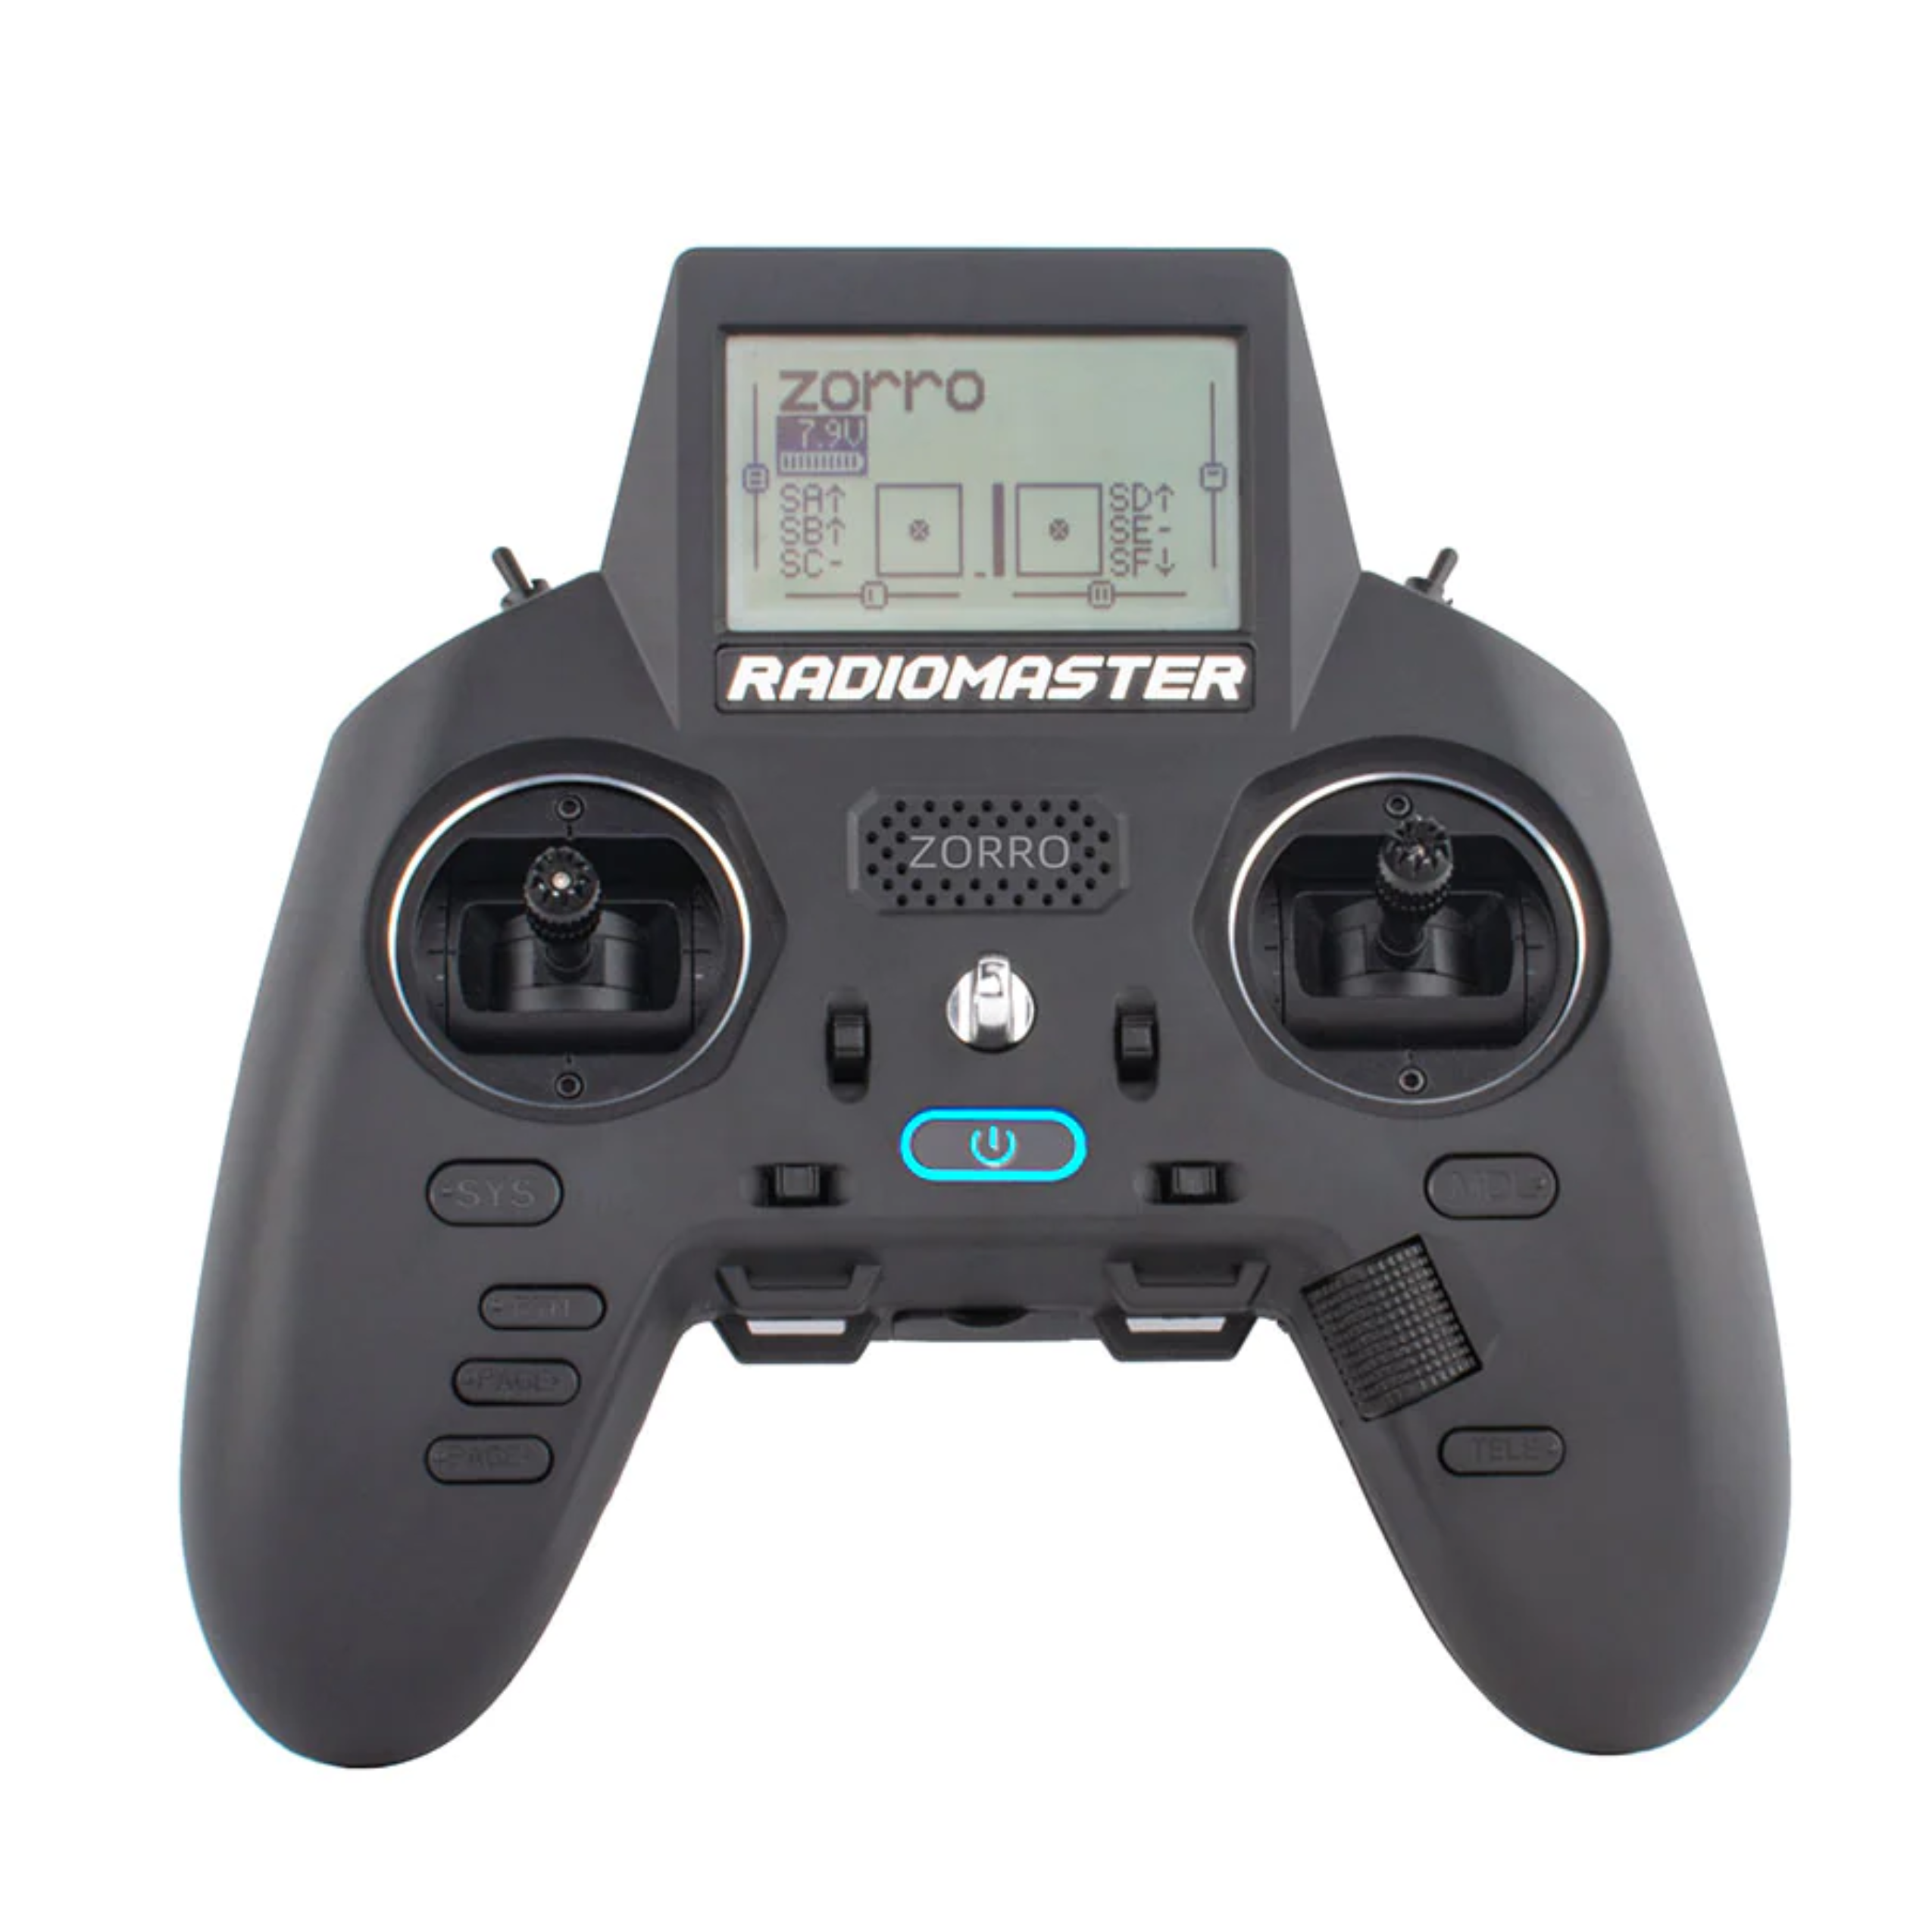 Radiomaster Zorro 4 In 1 Radio Controller with batteries - DroneLabs.ca